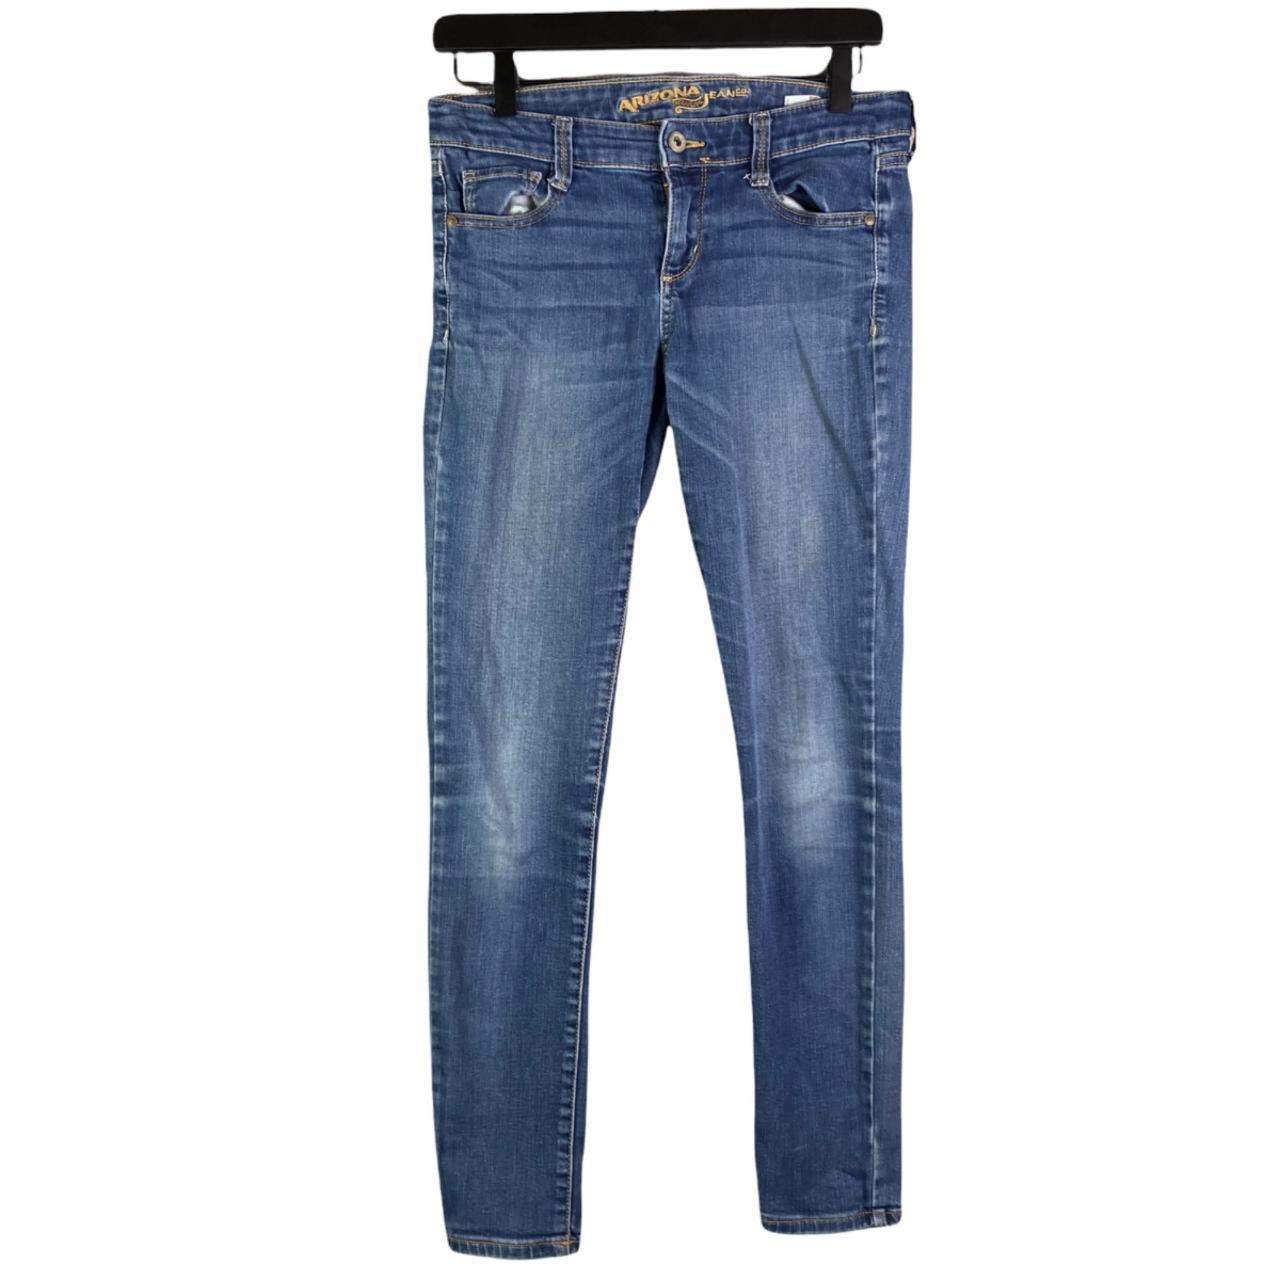 Item: Arizona Jeans Super Skinny Average Denim... Size Depop 